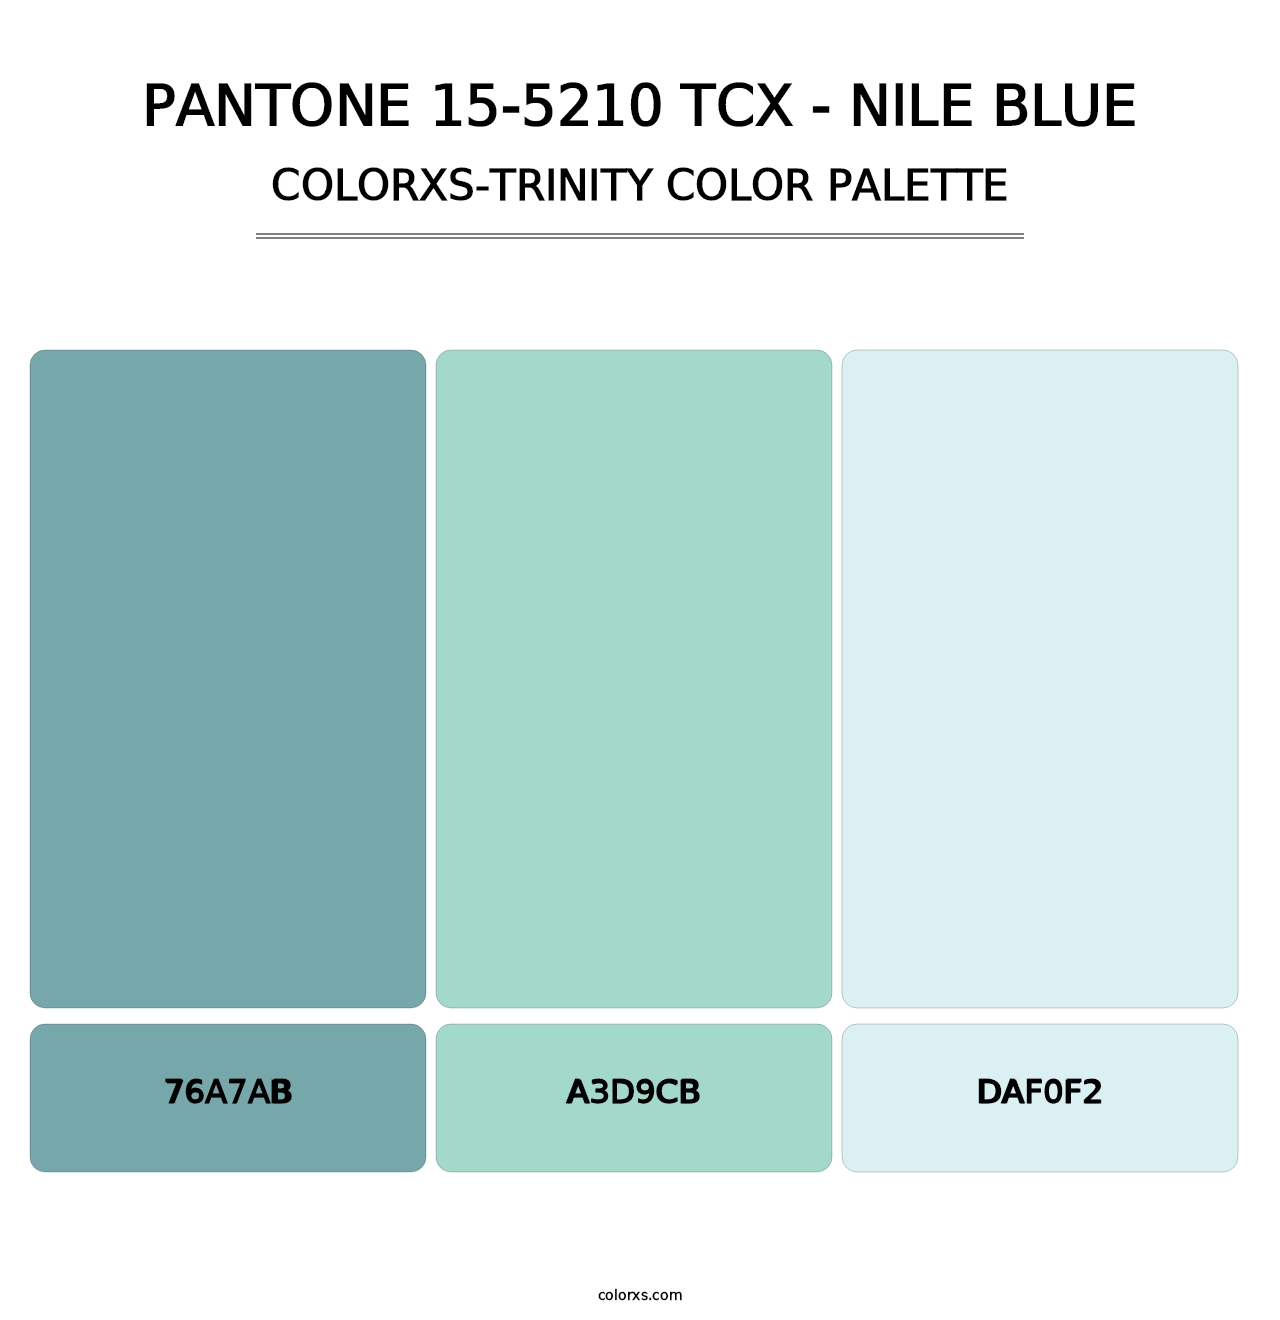 PANTONE 15-5210 TCX - Nile Blue - Colorxs Trinity Palette